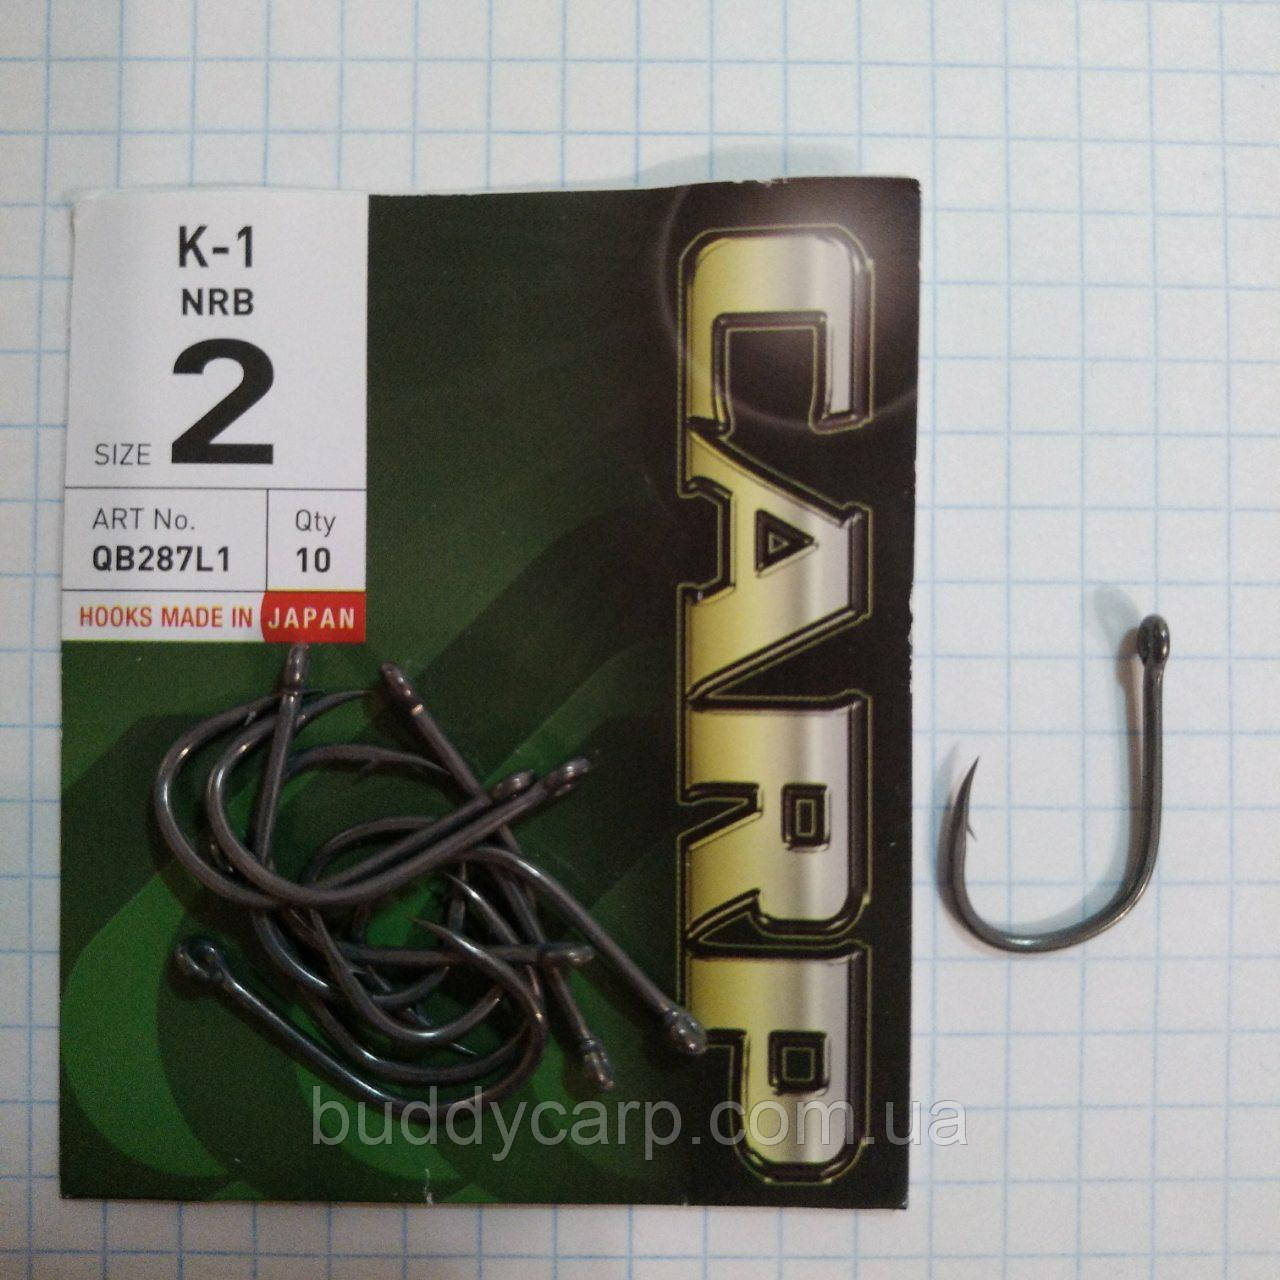 Гачки Hayabusa Carp K-1 NRB size 2